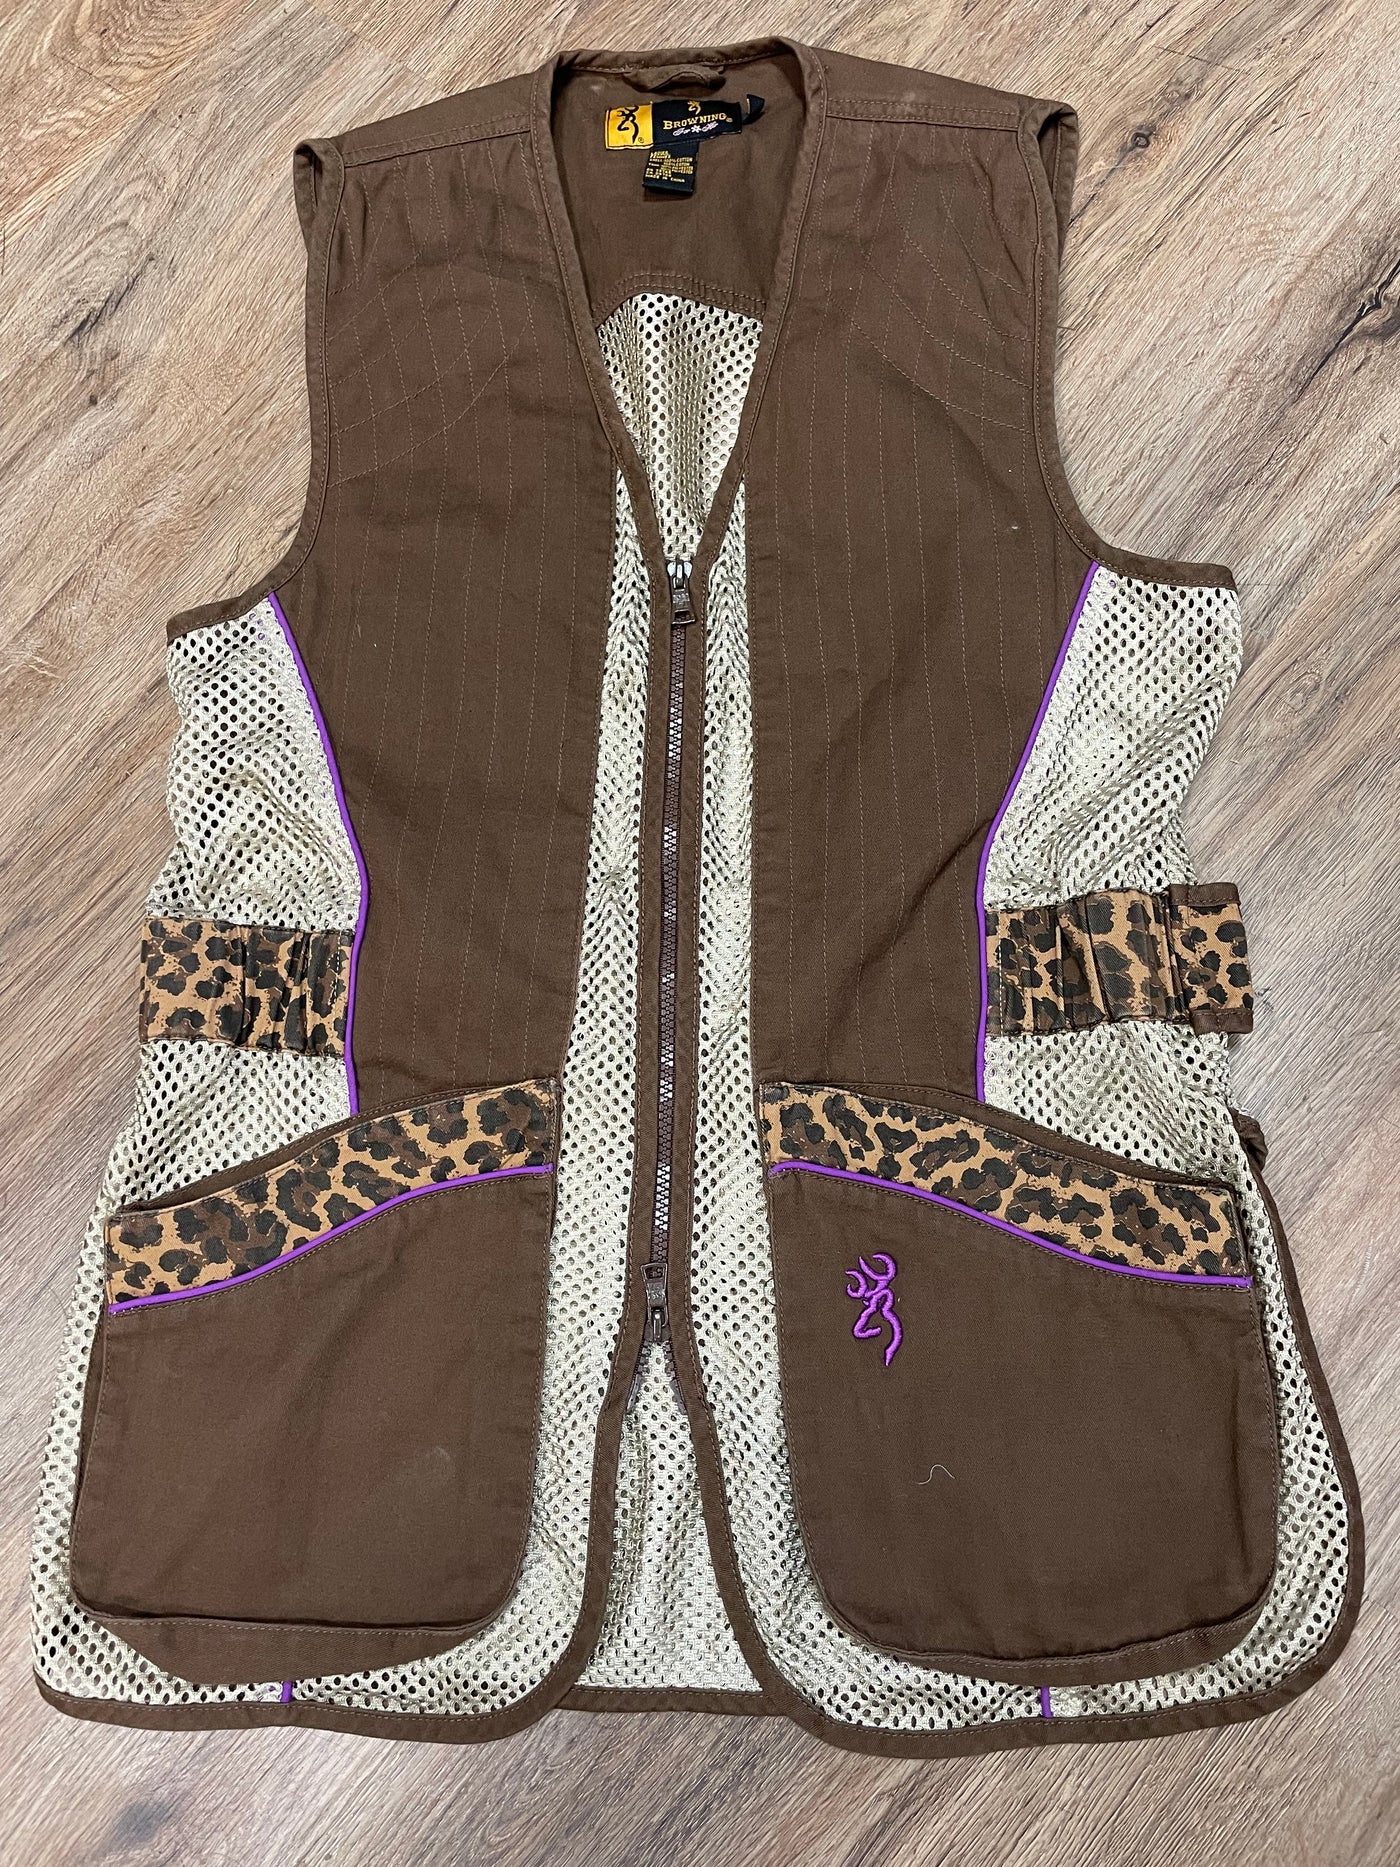 Browning for Her women’s zebra print hunting vest